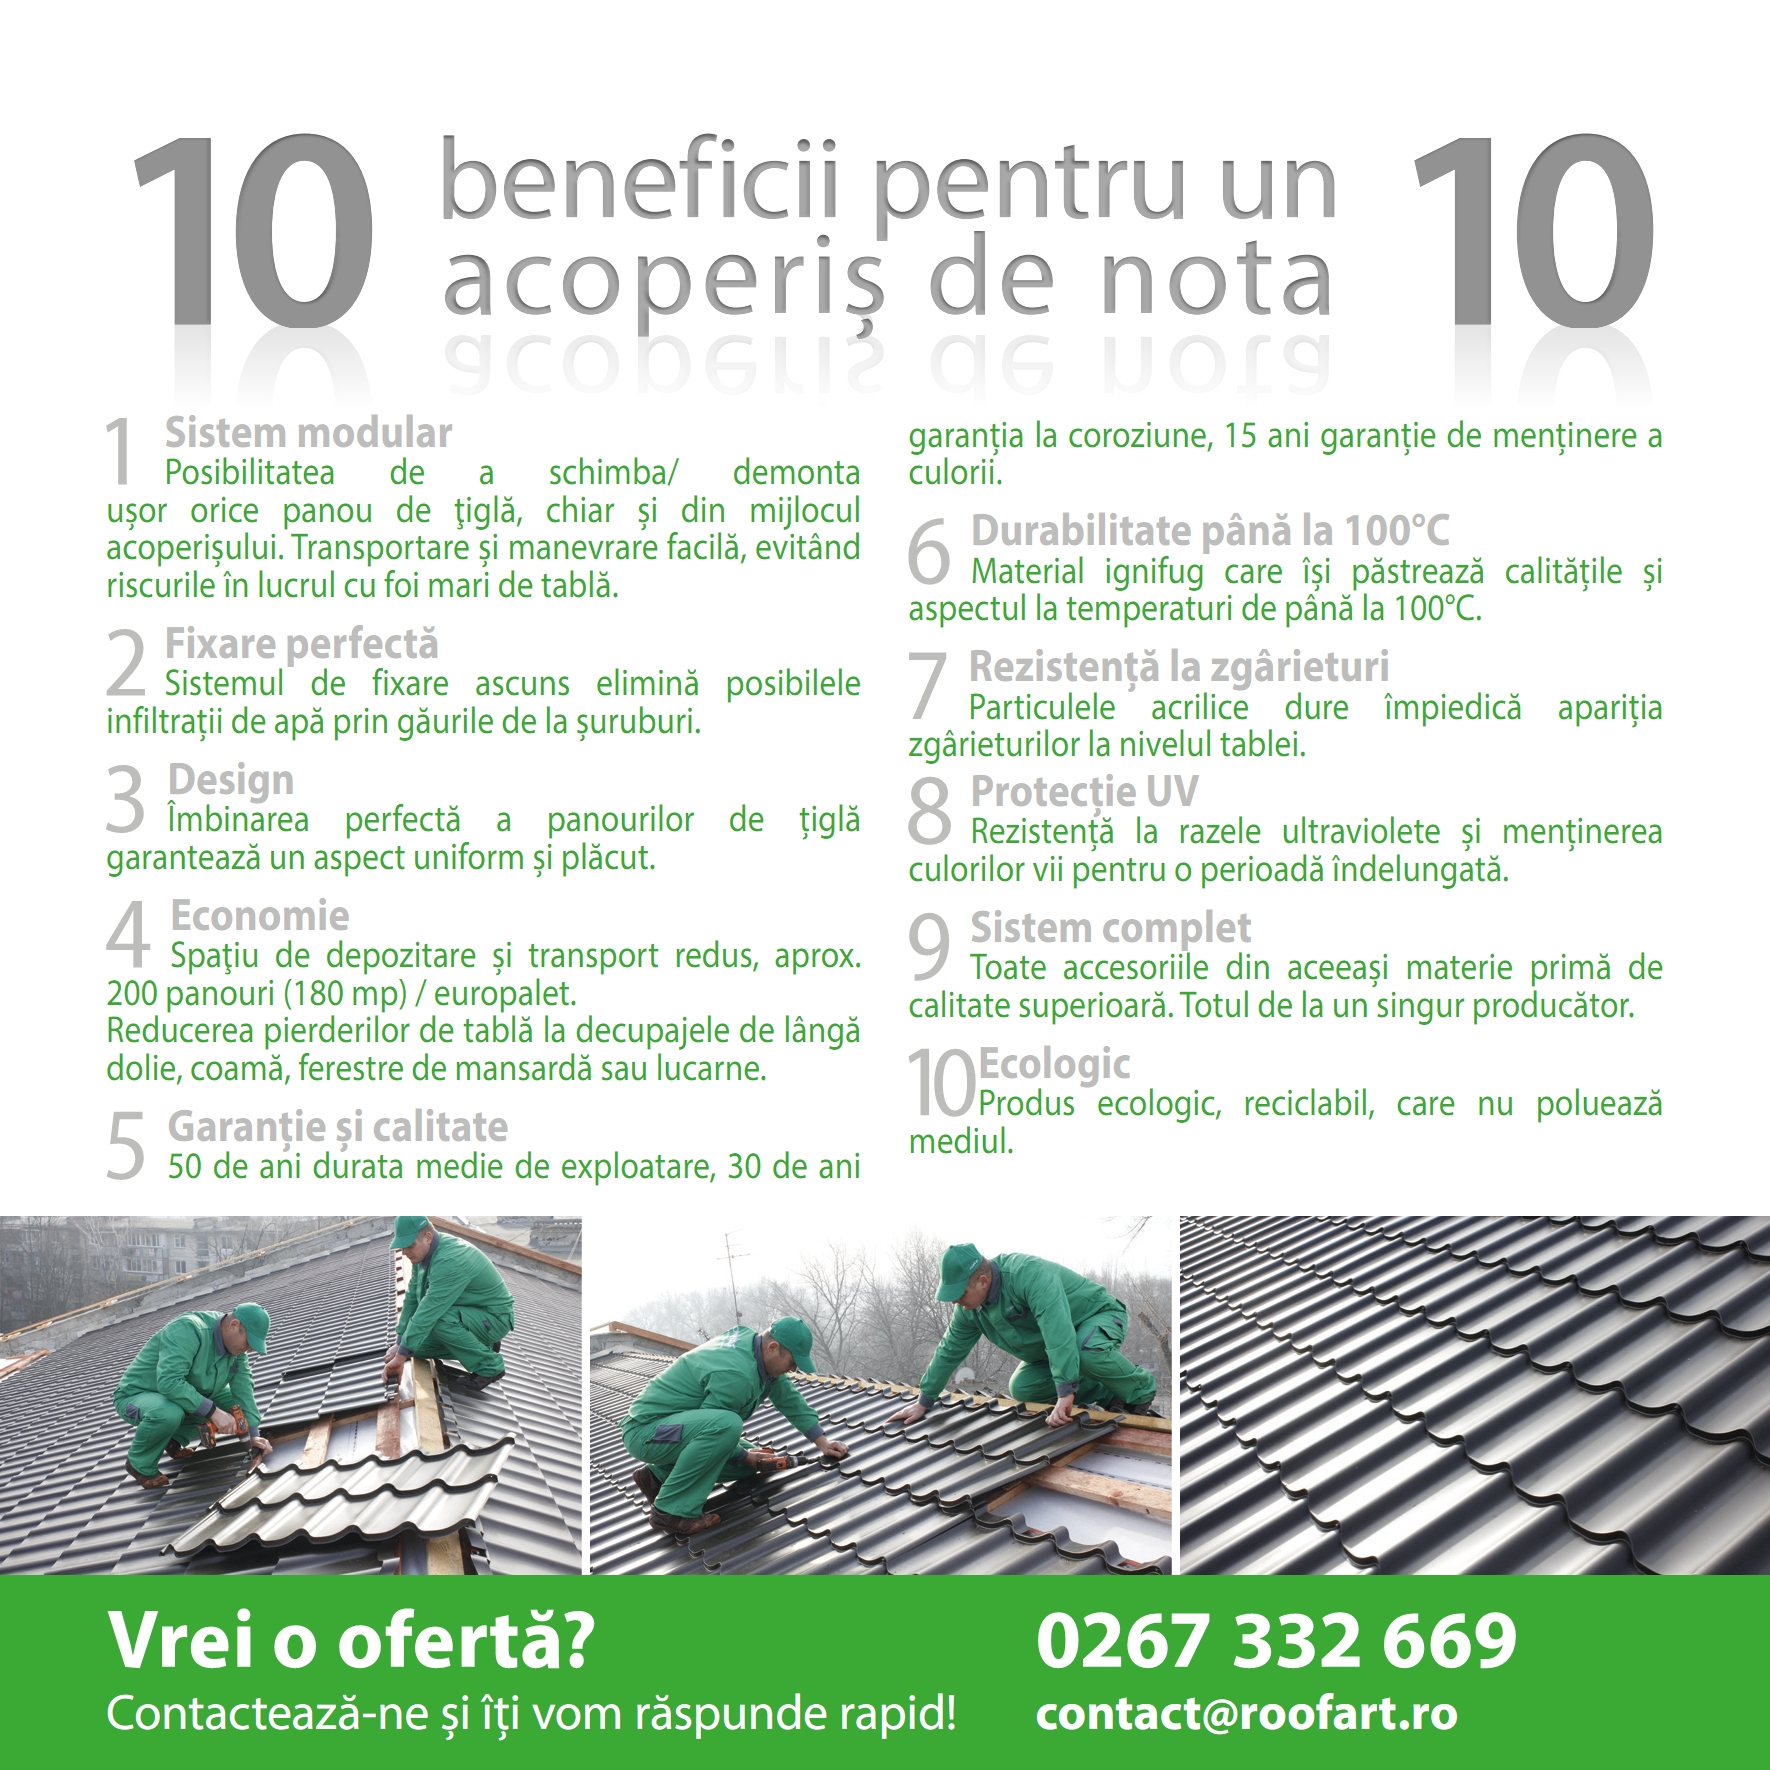 10 beneficii pentru un acoperis de nota 10	 - Beneficii acoperis